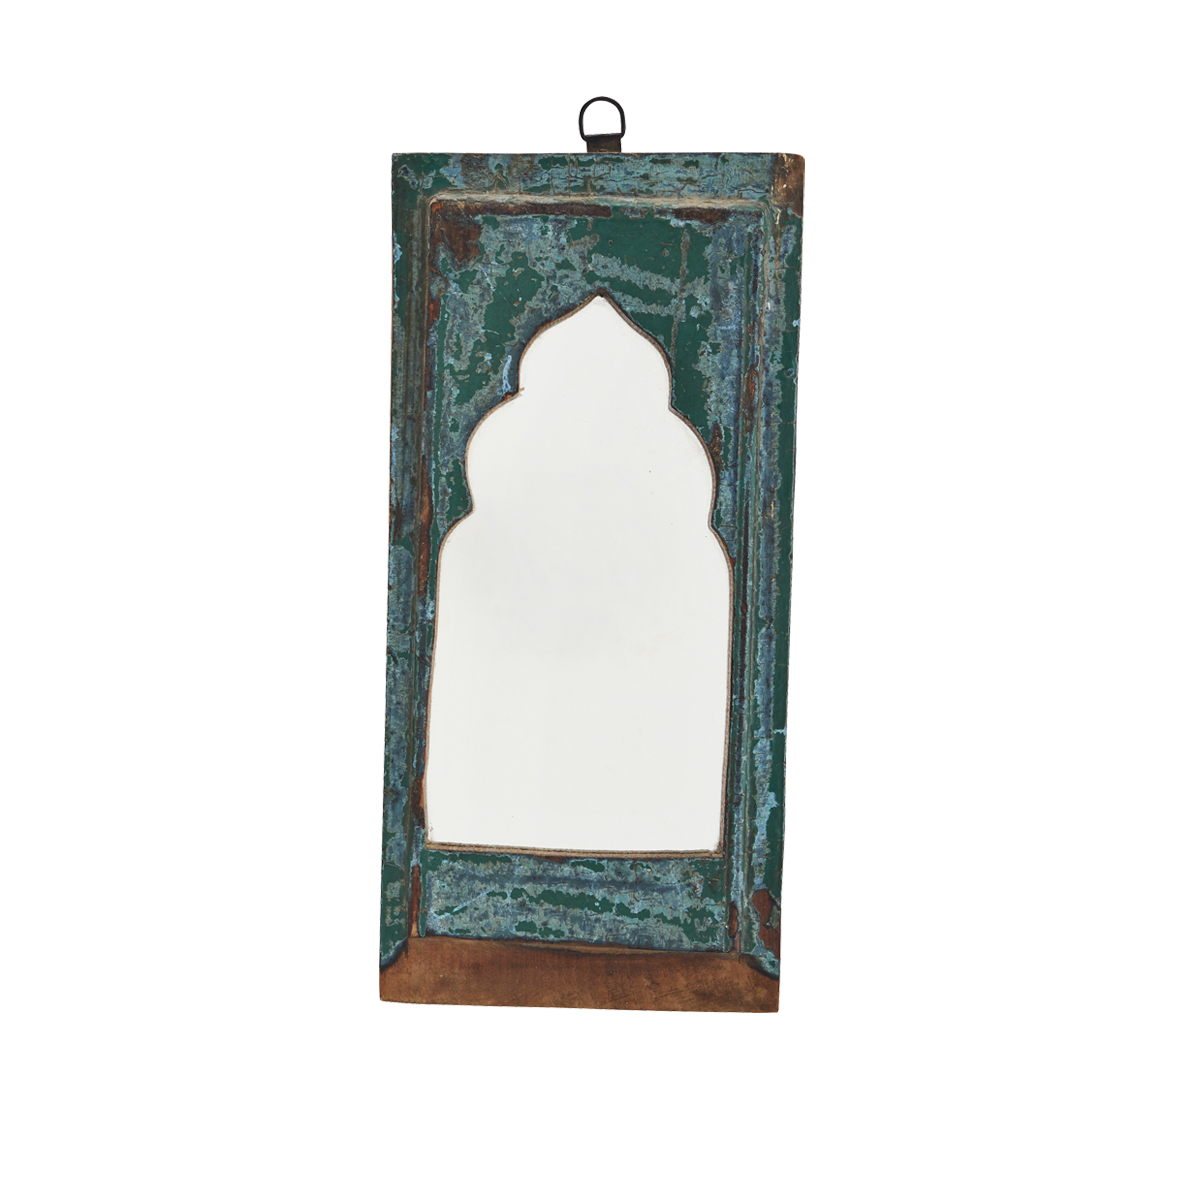 Reused mirror w/ wooden frame